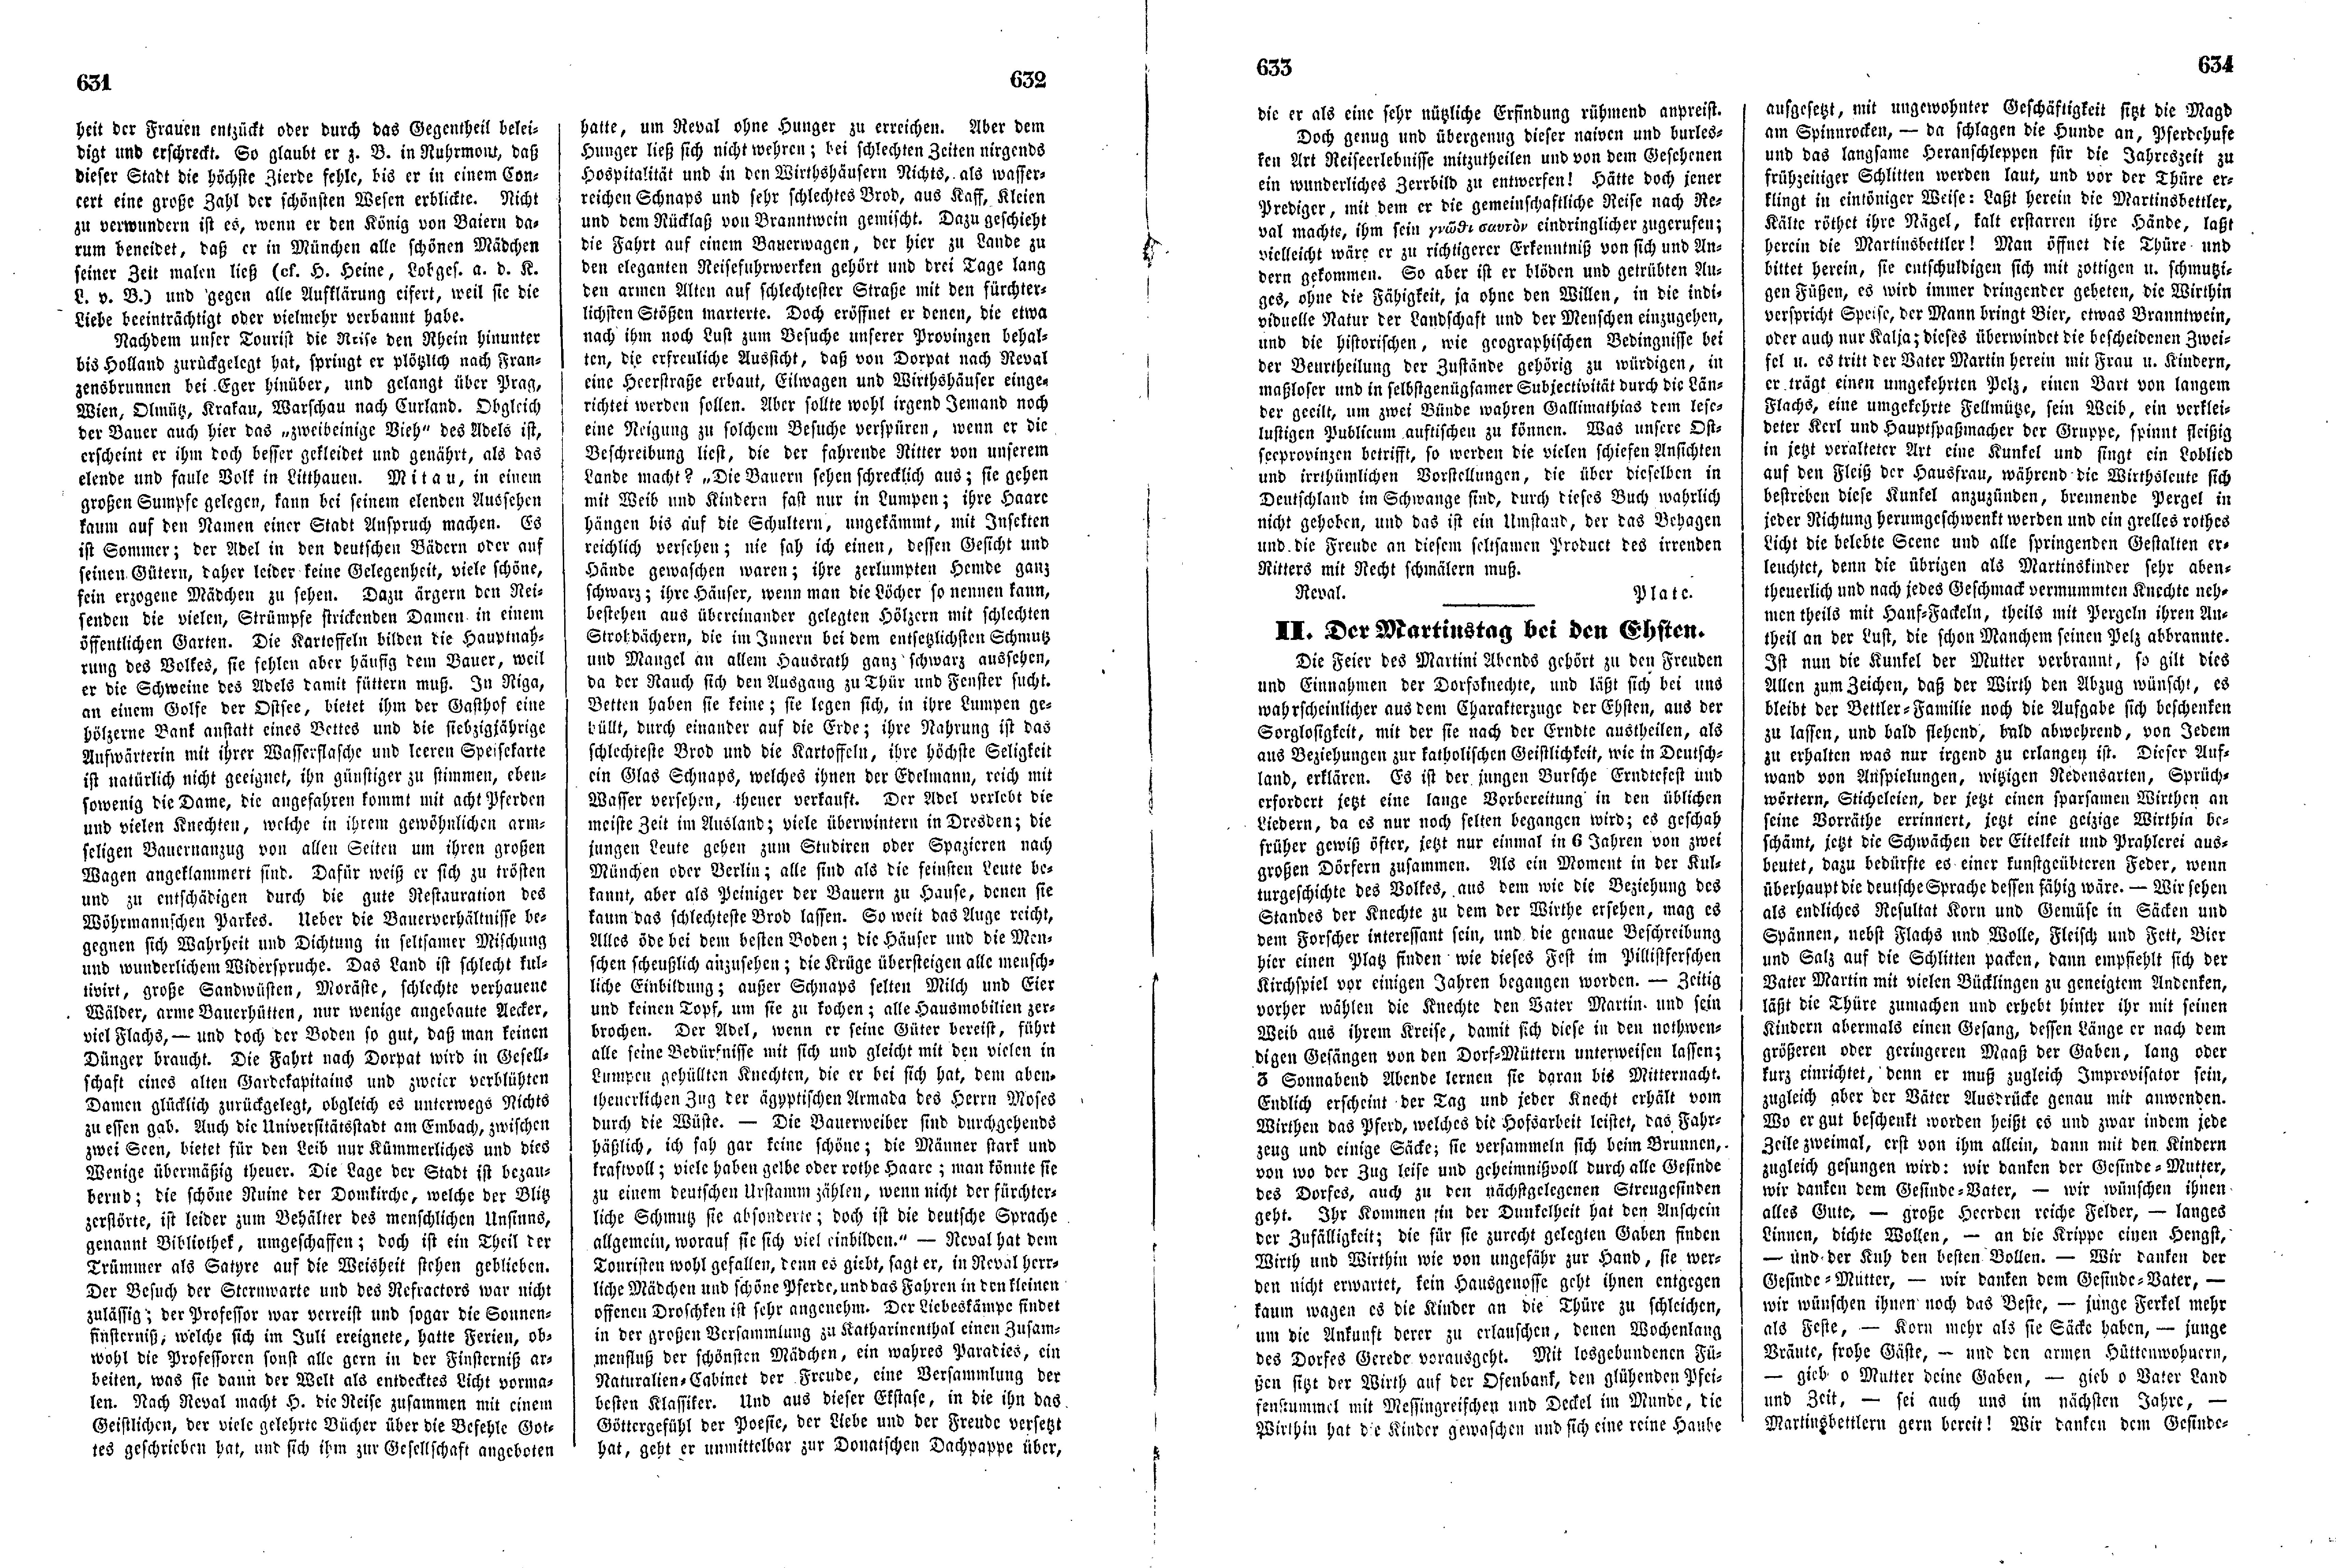 Das Inland [11] (1846) | 163. (631-634) Main body of text